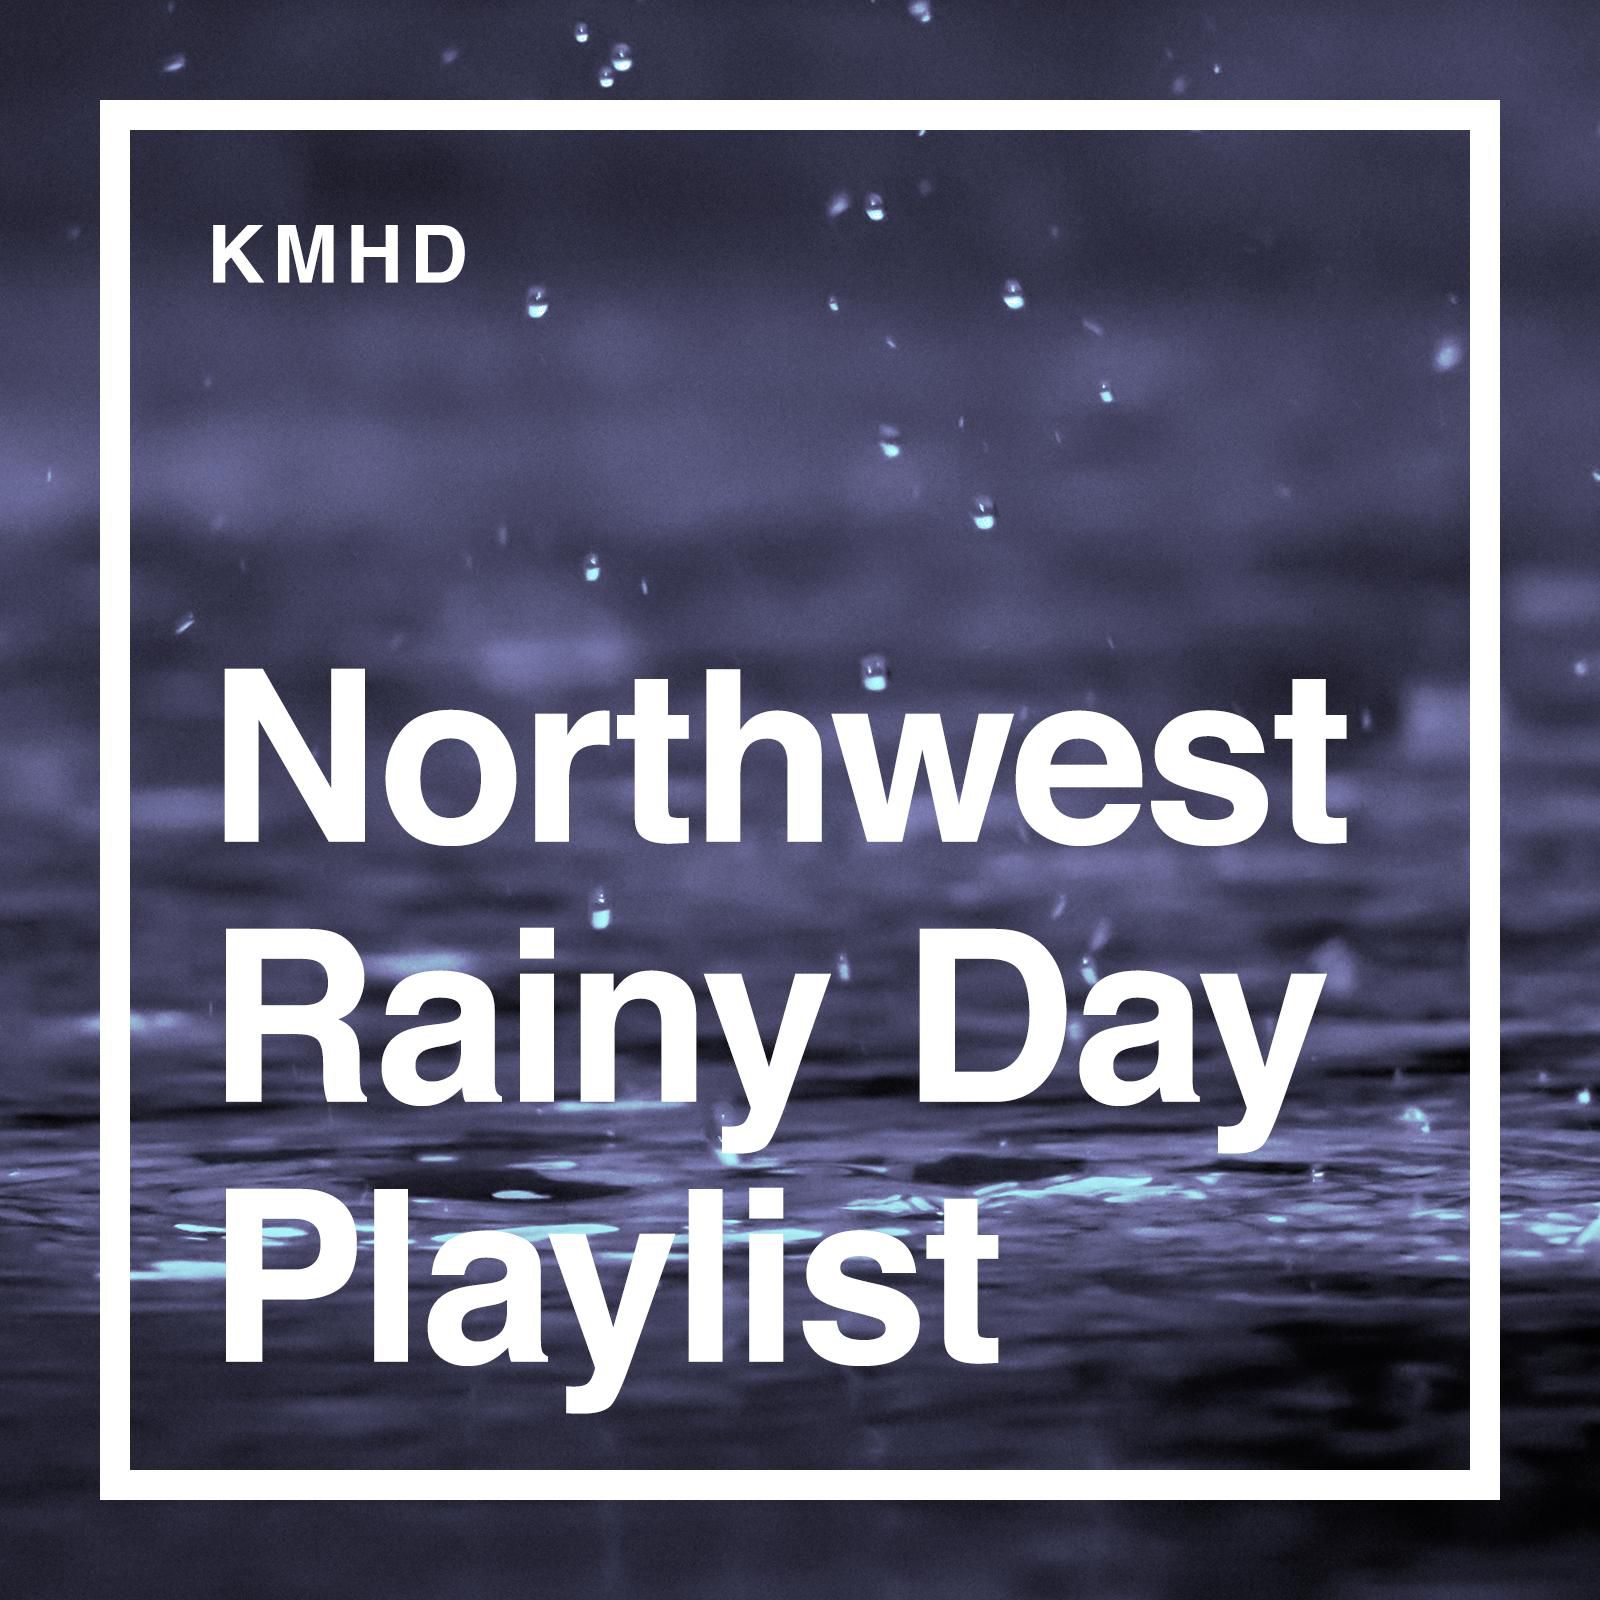 27 Top Rainy Day Songs: Best Wet Weather Playlist – Billboard